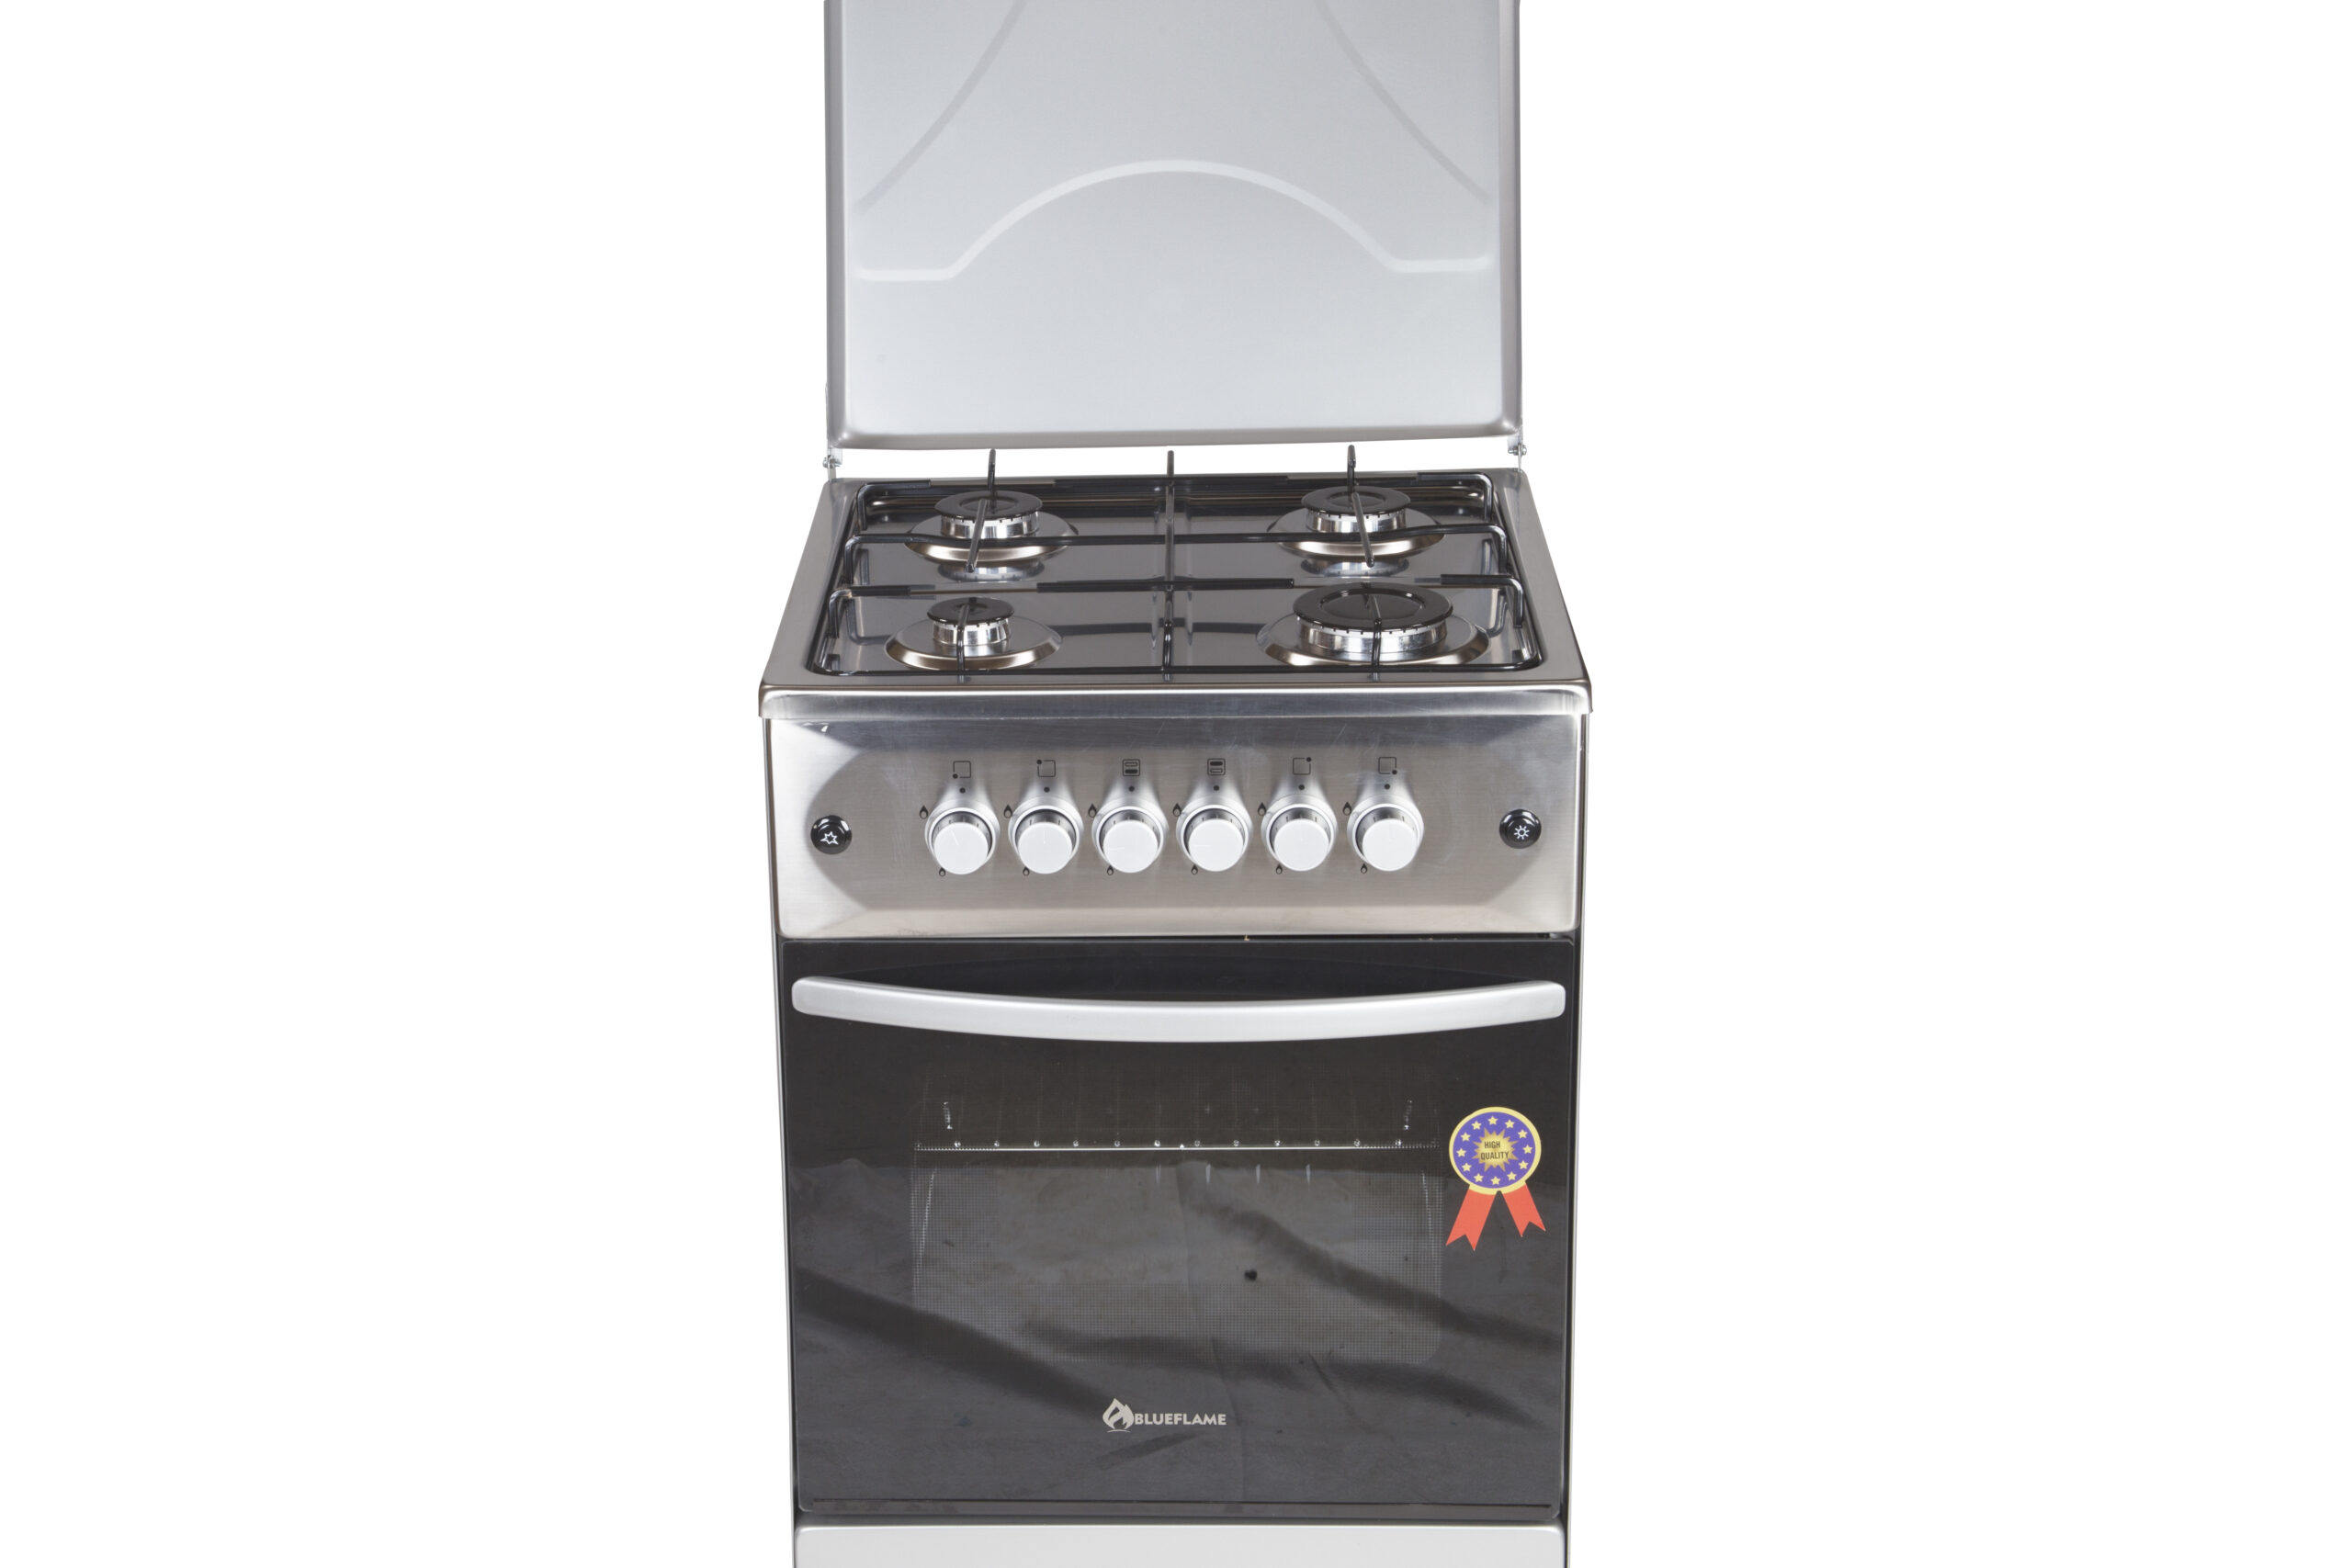 Blueflame cooker C5040G – I